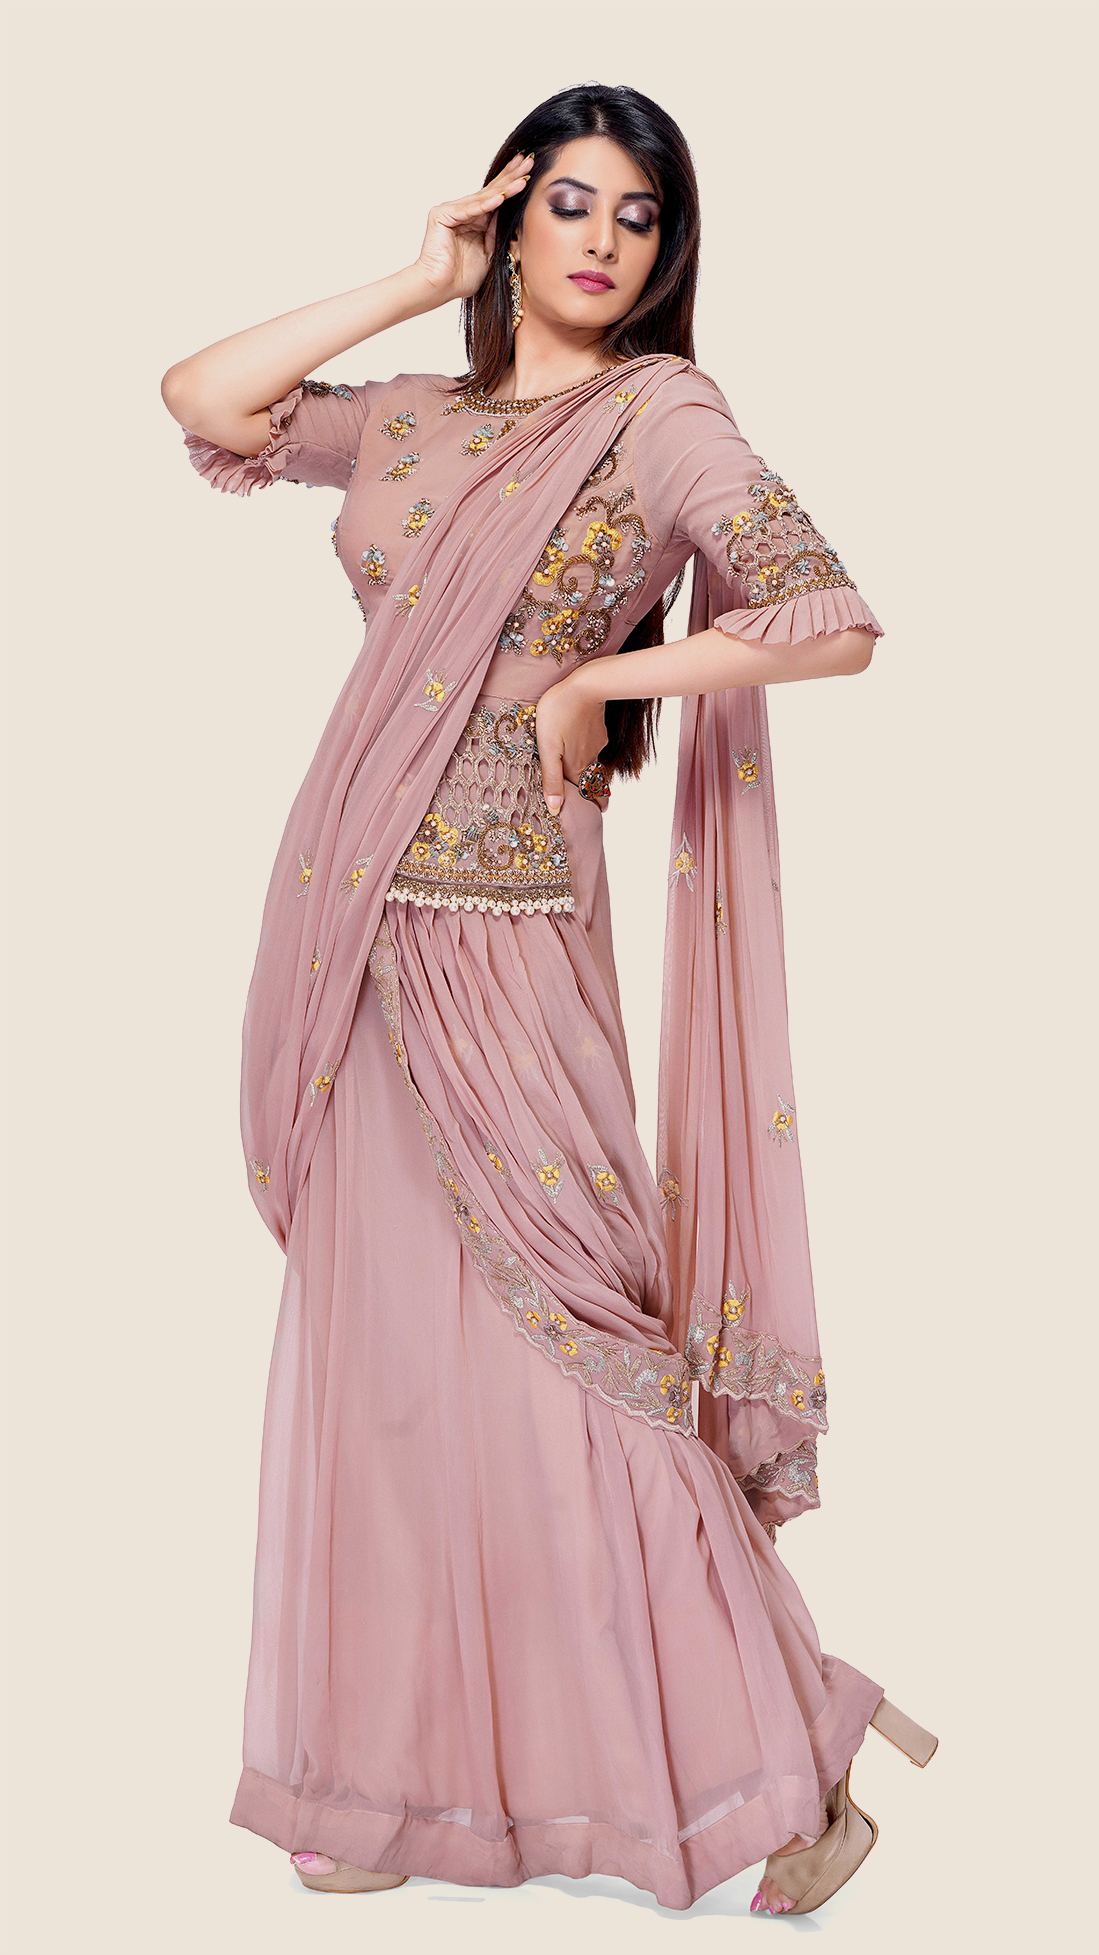 Stunning Lara Dutta in Indian Lehenga Saree - MiaIndia.com